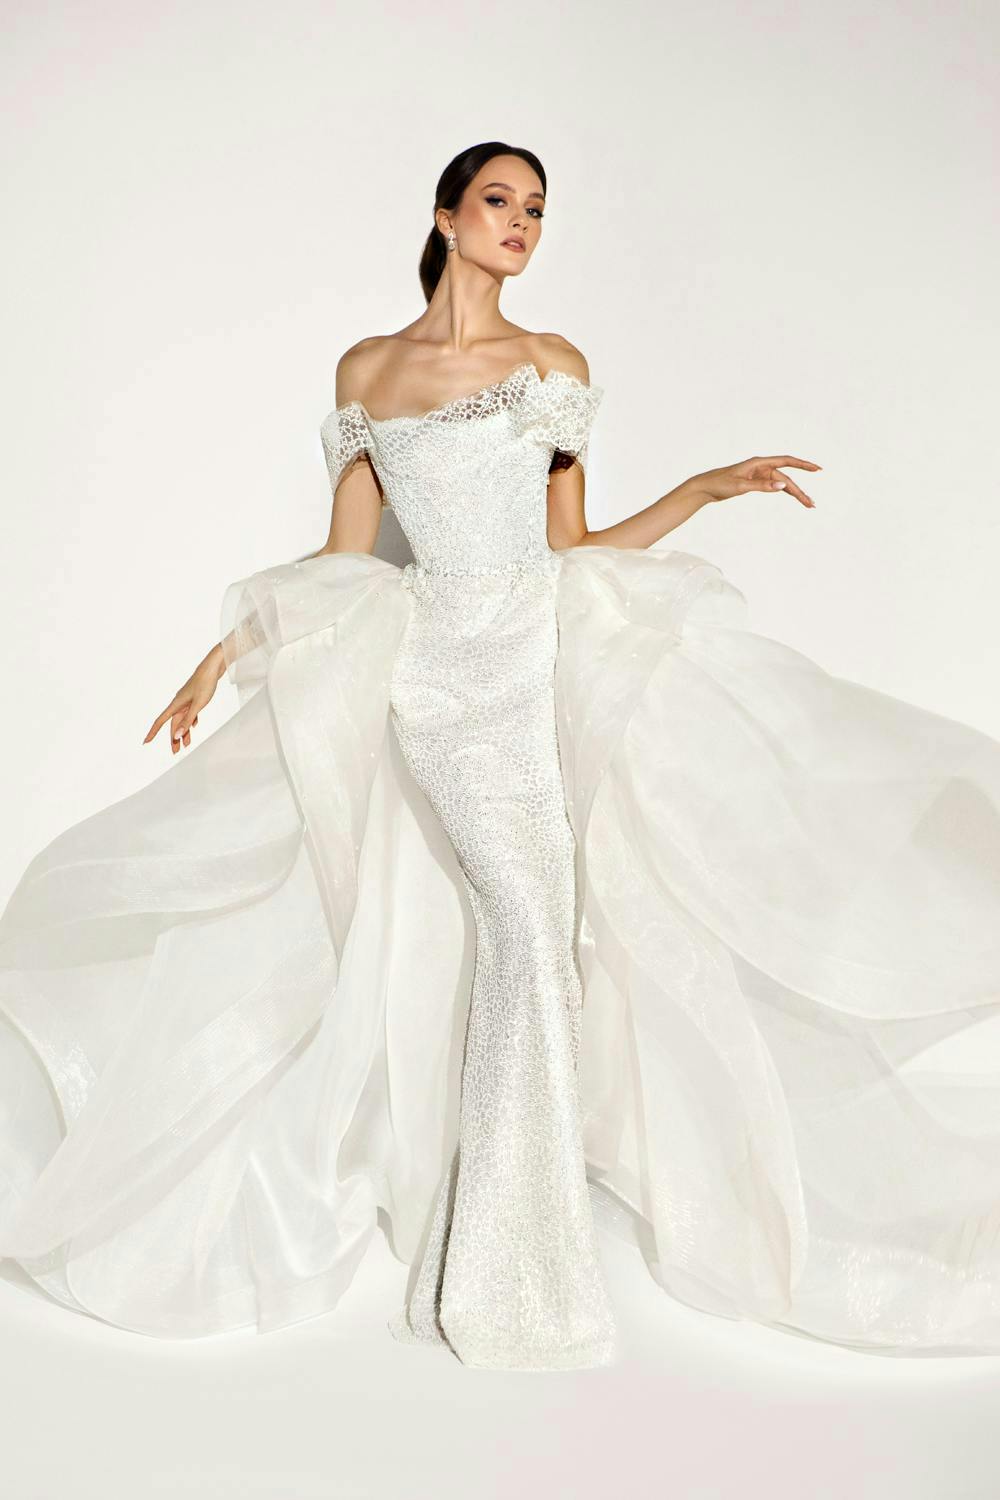 dress fashion formal wear gown wedding gown adult bride female person woman